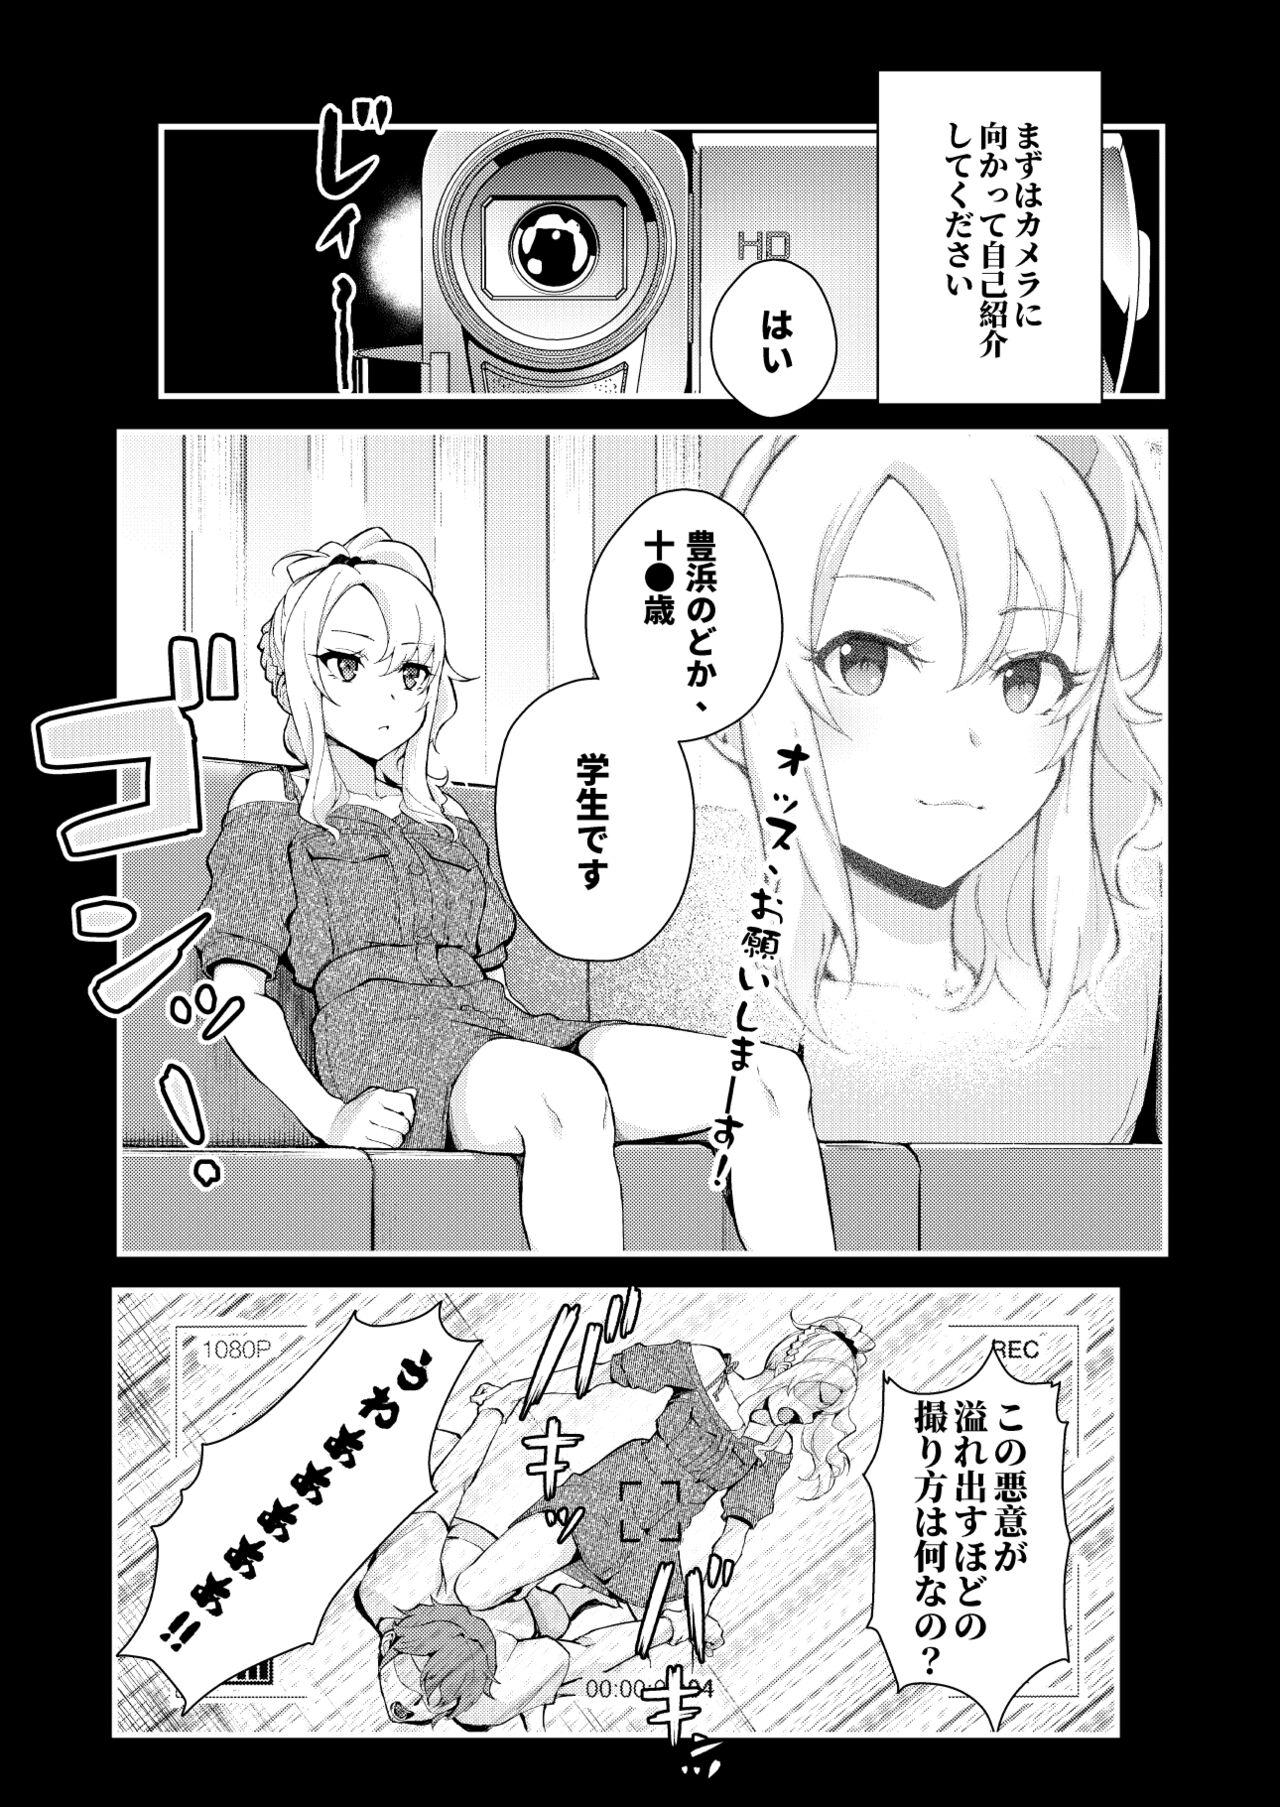 Uniform Sisters Panic - Seishun buta yarou wa bunny girl senpai no yume o minai Stepsiblings - Page 2